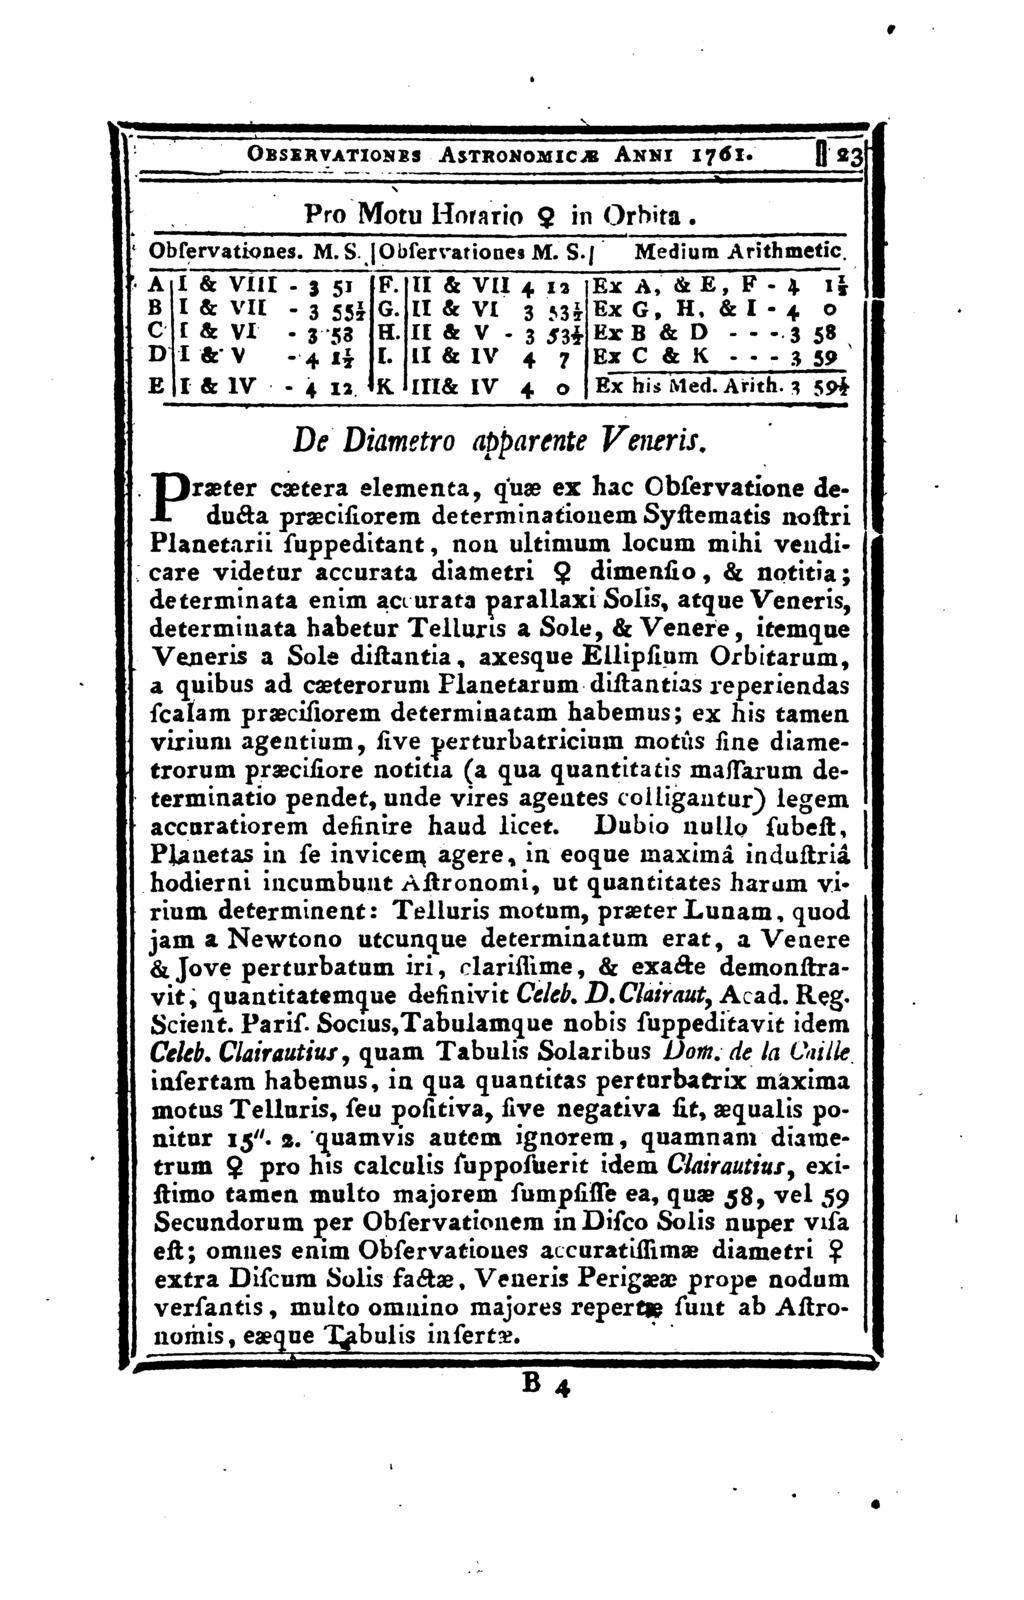 Observations* Astronomics Anni 1761. U 23I Pro Motu Horario Ç in Orhita. Observationes. M. S. Observationes M. S. Medium Arithmetic. A I & VIII - 3 51 F.